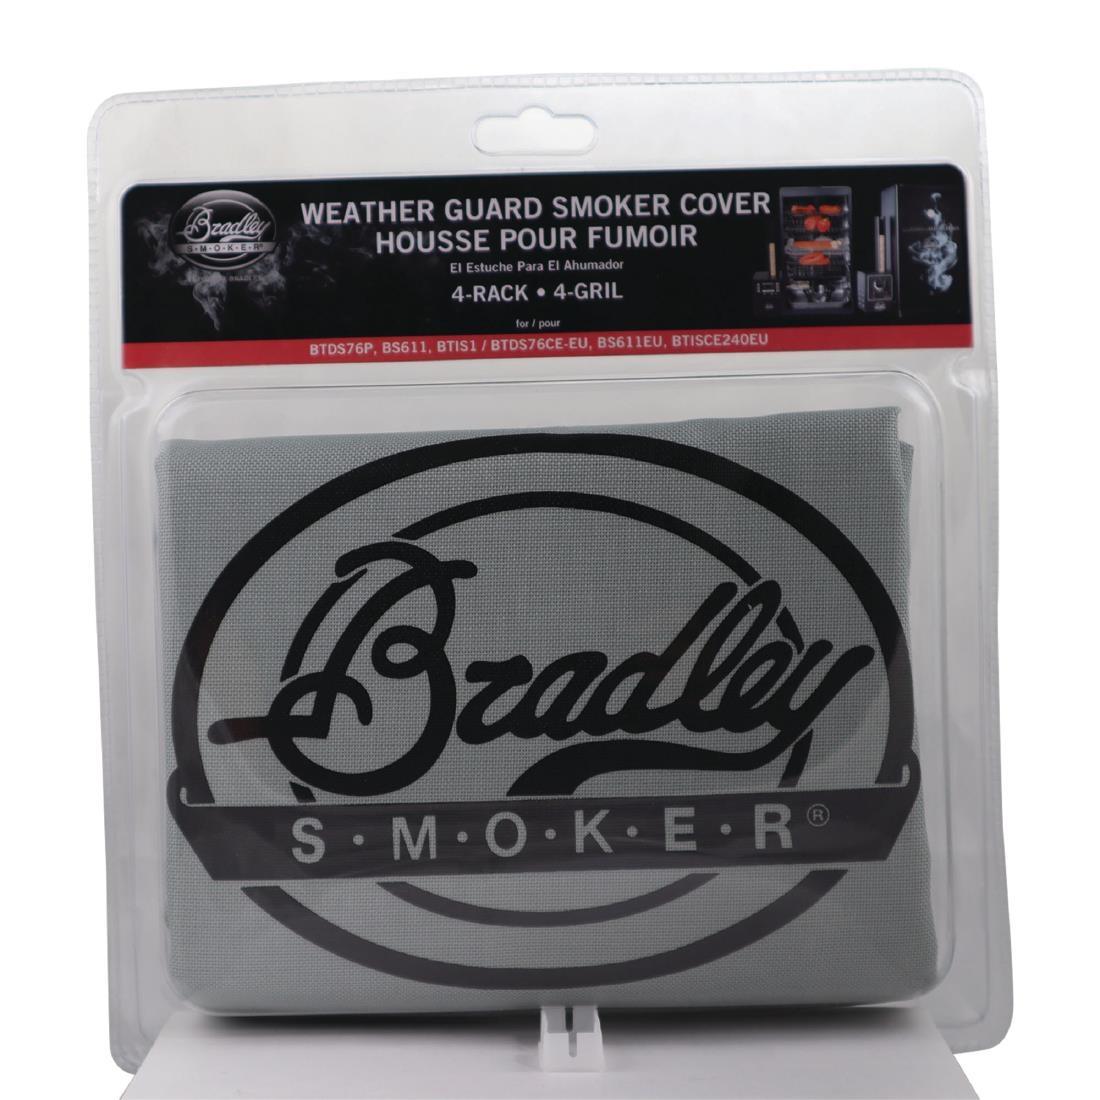 Bradley Smoker Weather Resistant Cover 4 Rack BTWRC - FE661  - 3